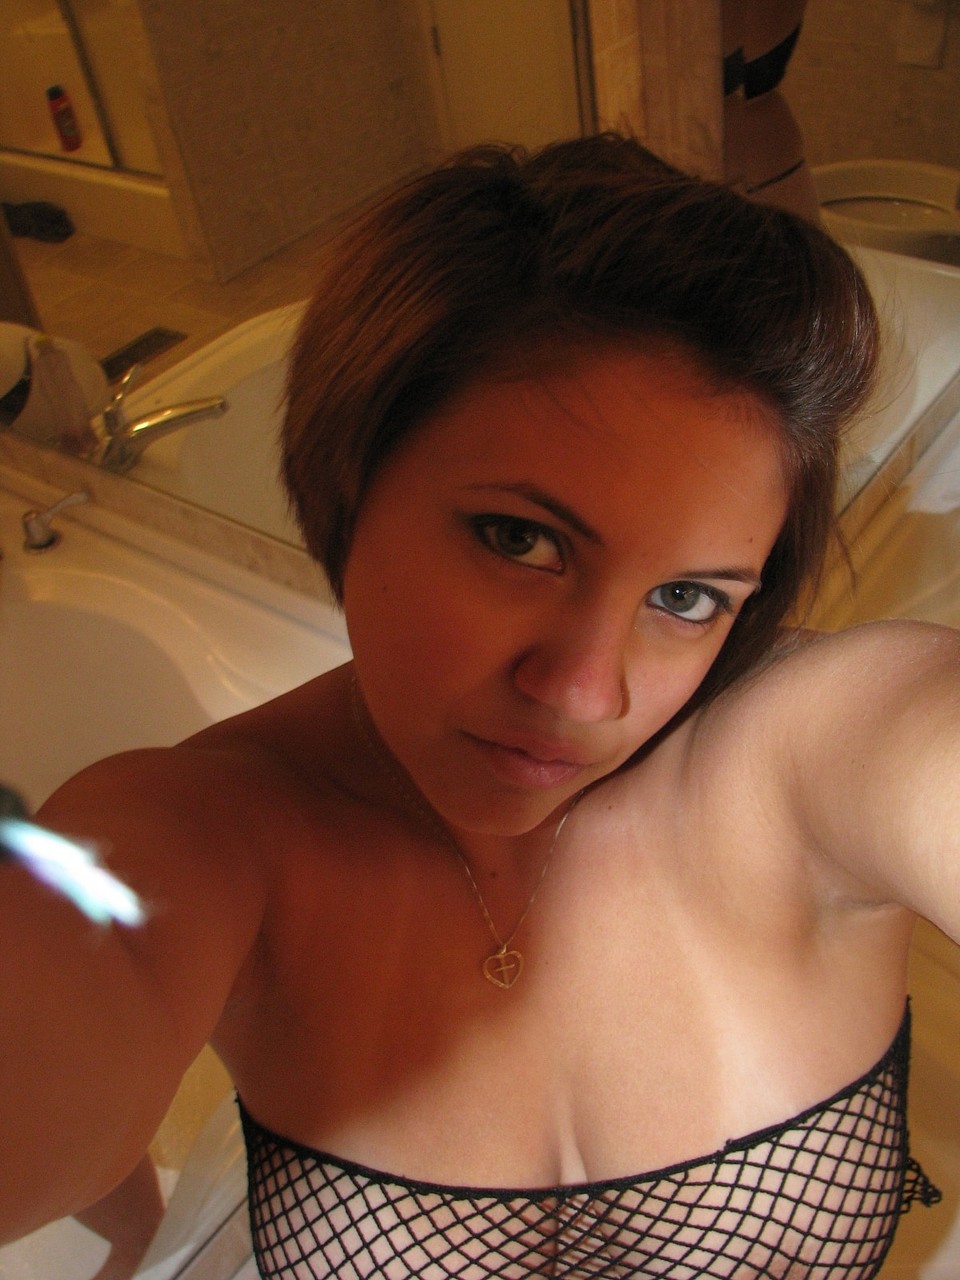 Sexy teen amateur shows off her big breasts while taking nude photos photo porno #427315085 | Teen Girl Photos Pics, Amateur, porno mobile